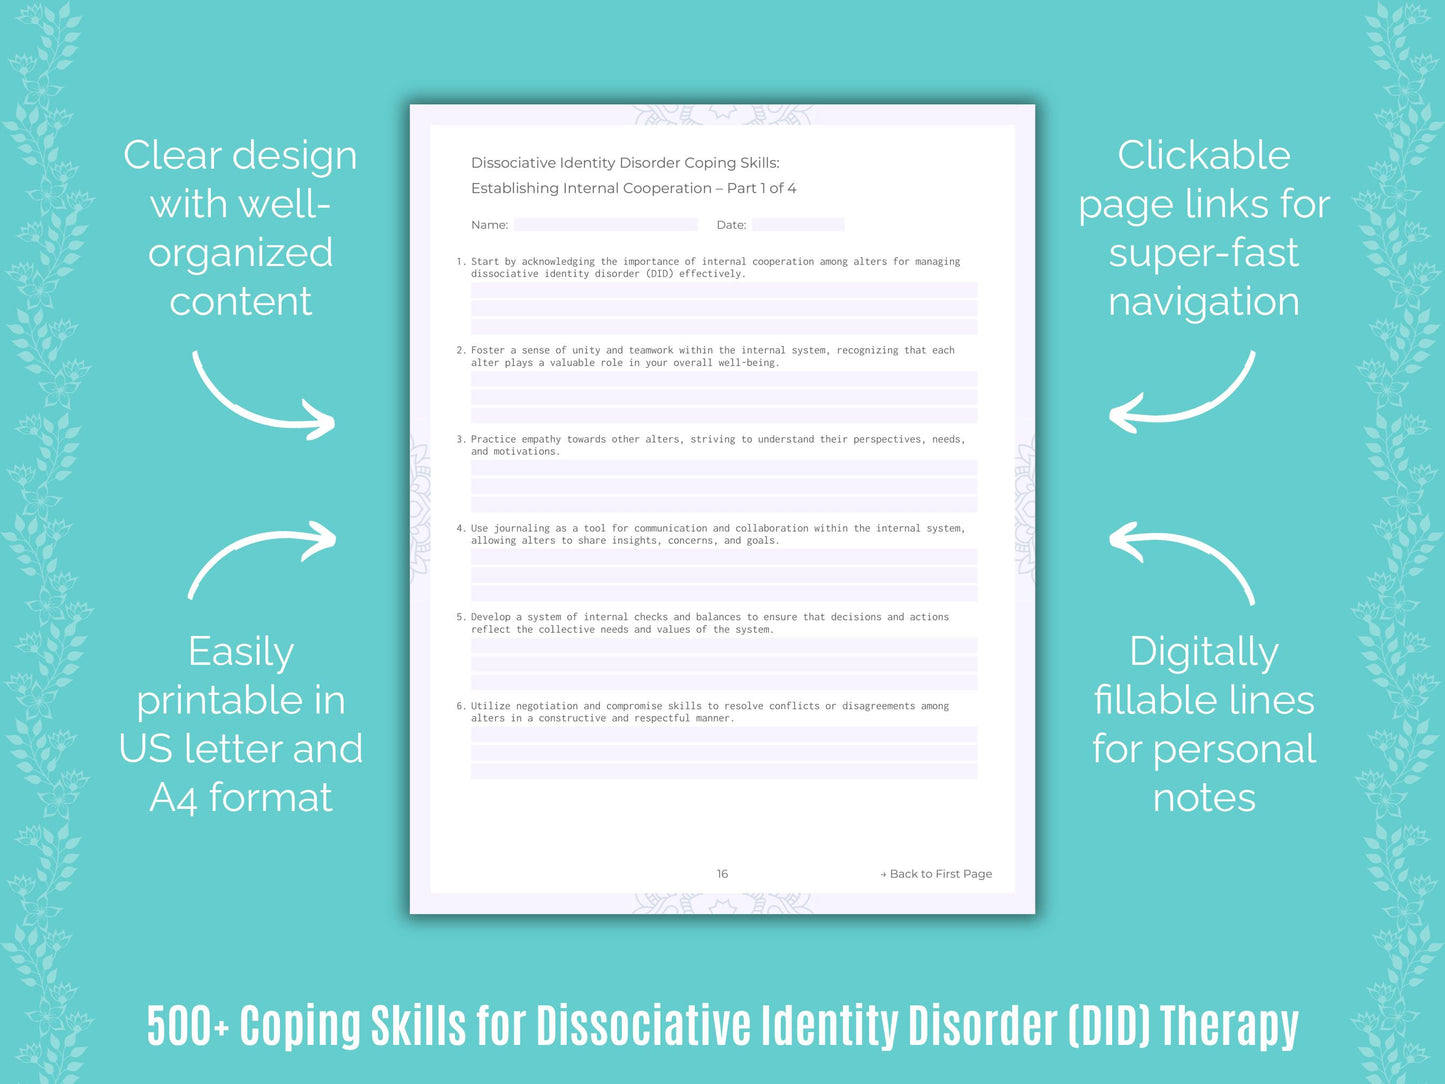 Dissociative Identity Disorder (DID) Coping Skills